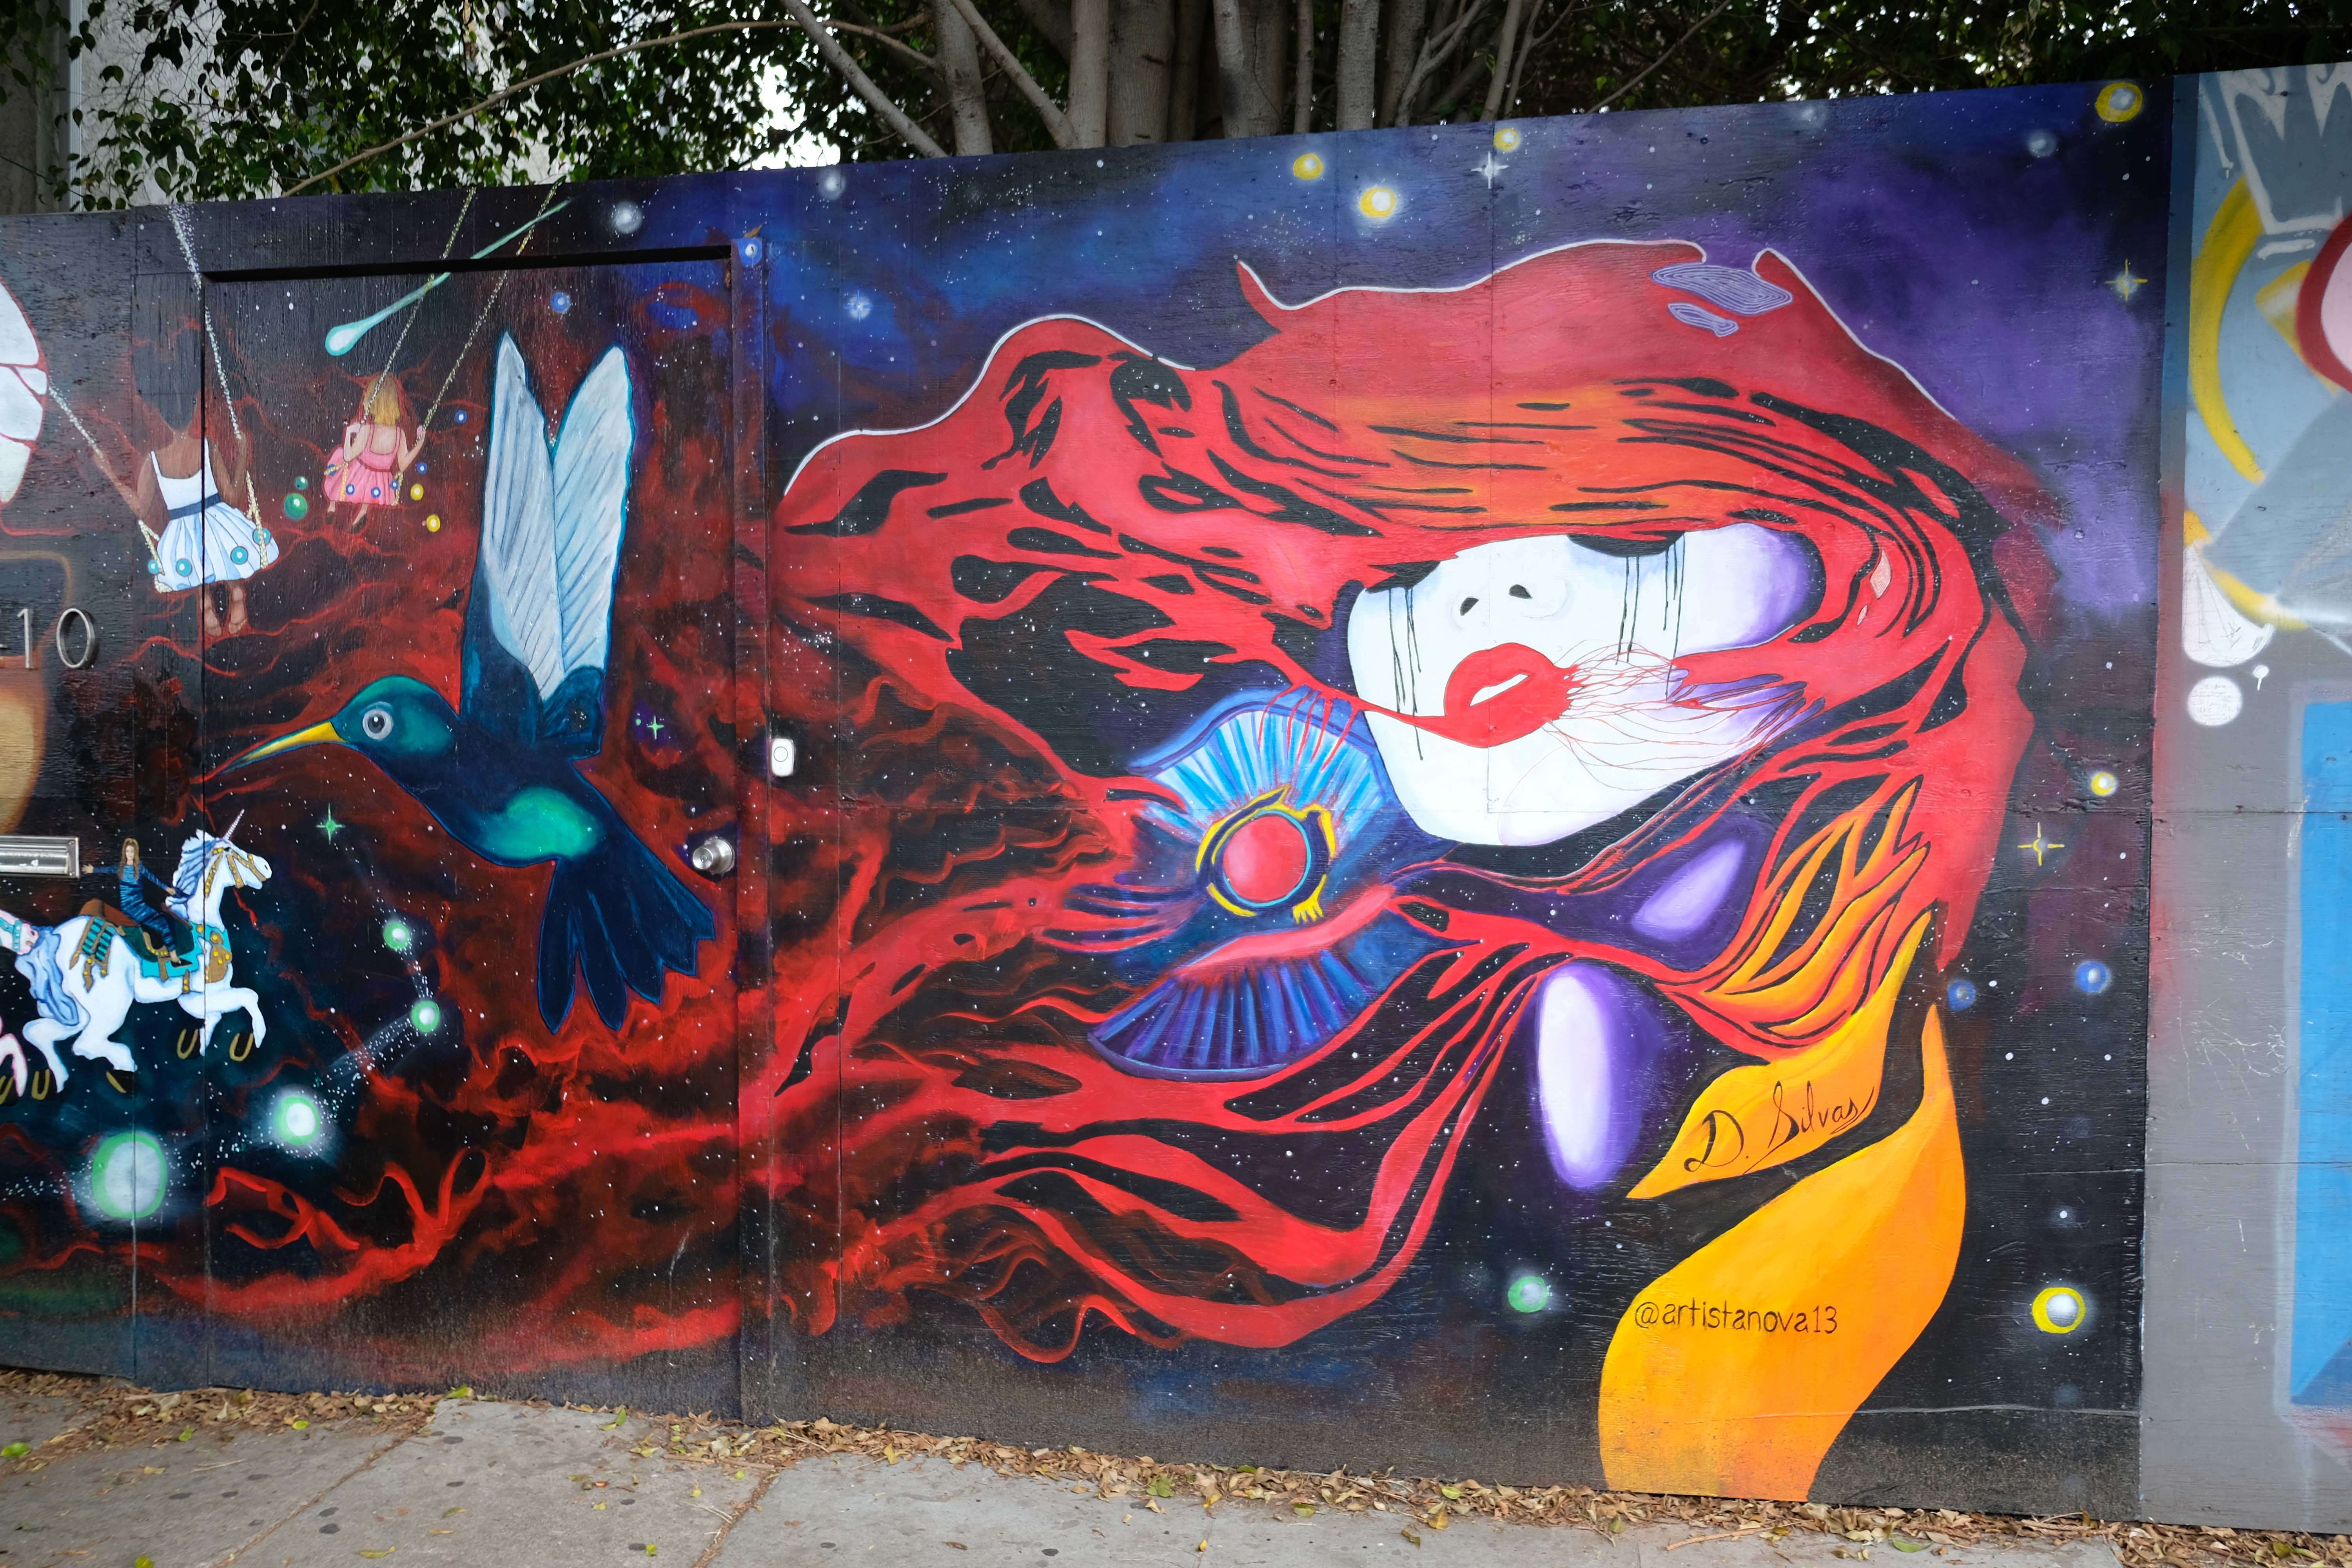 Daniel silvas mural of a woman with red hair